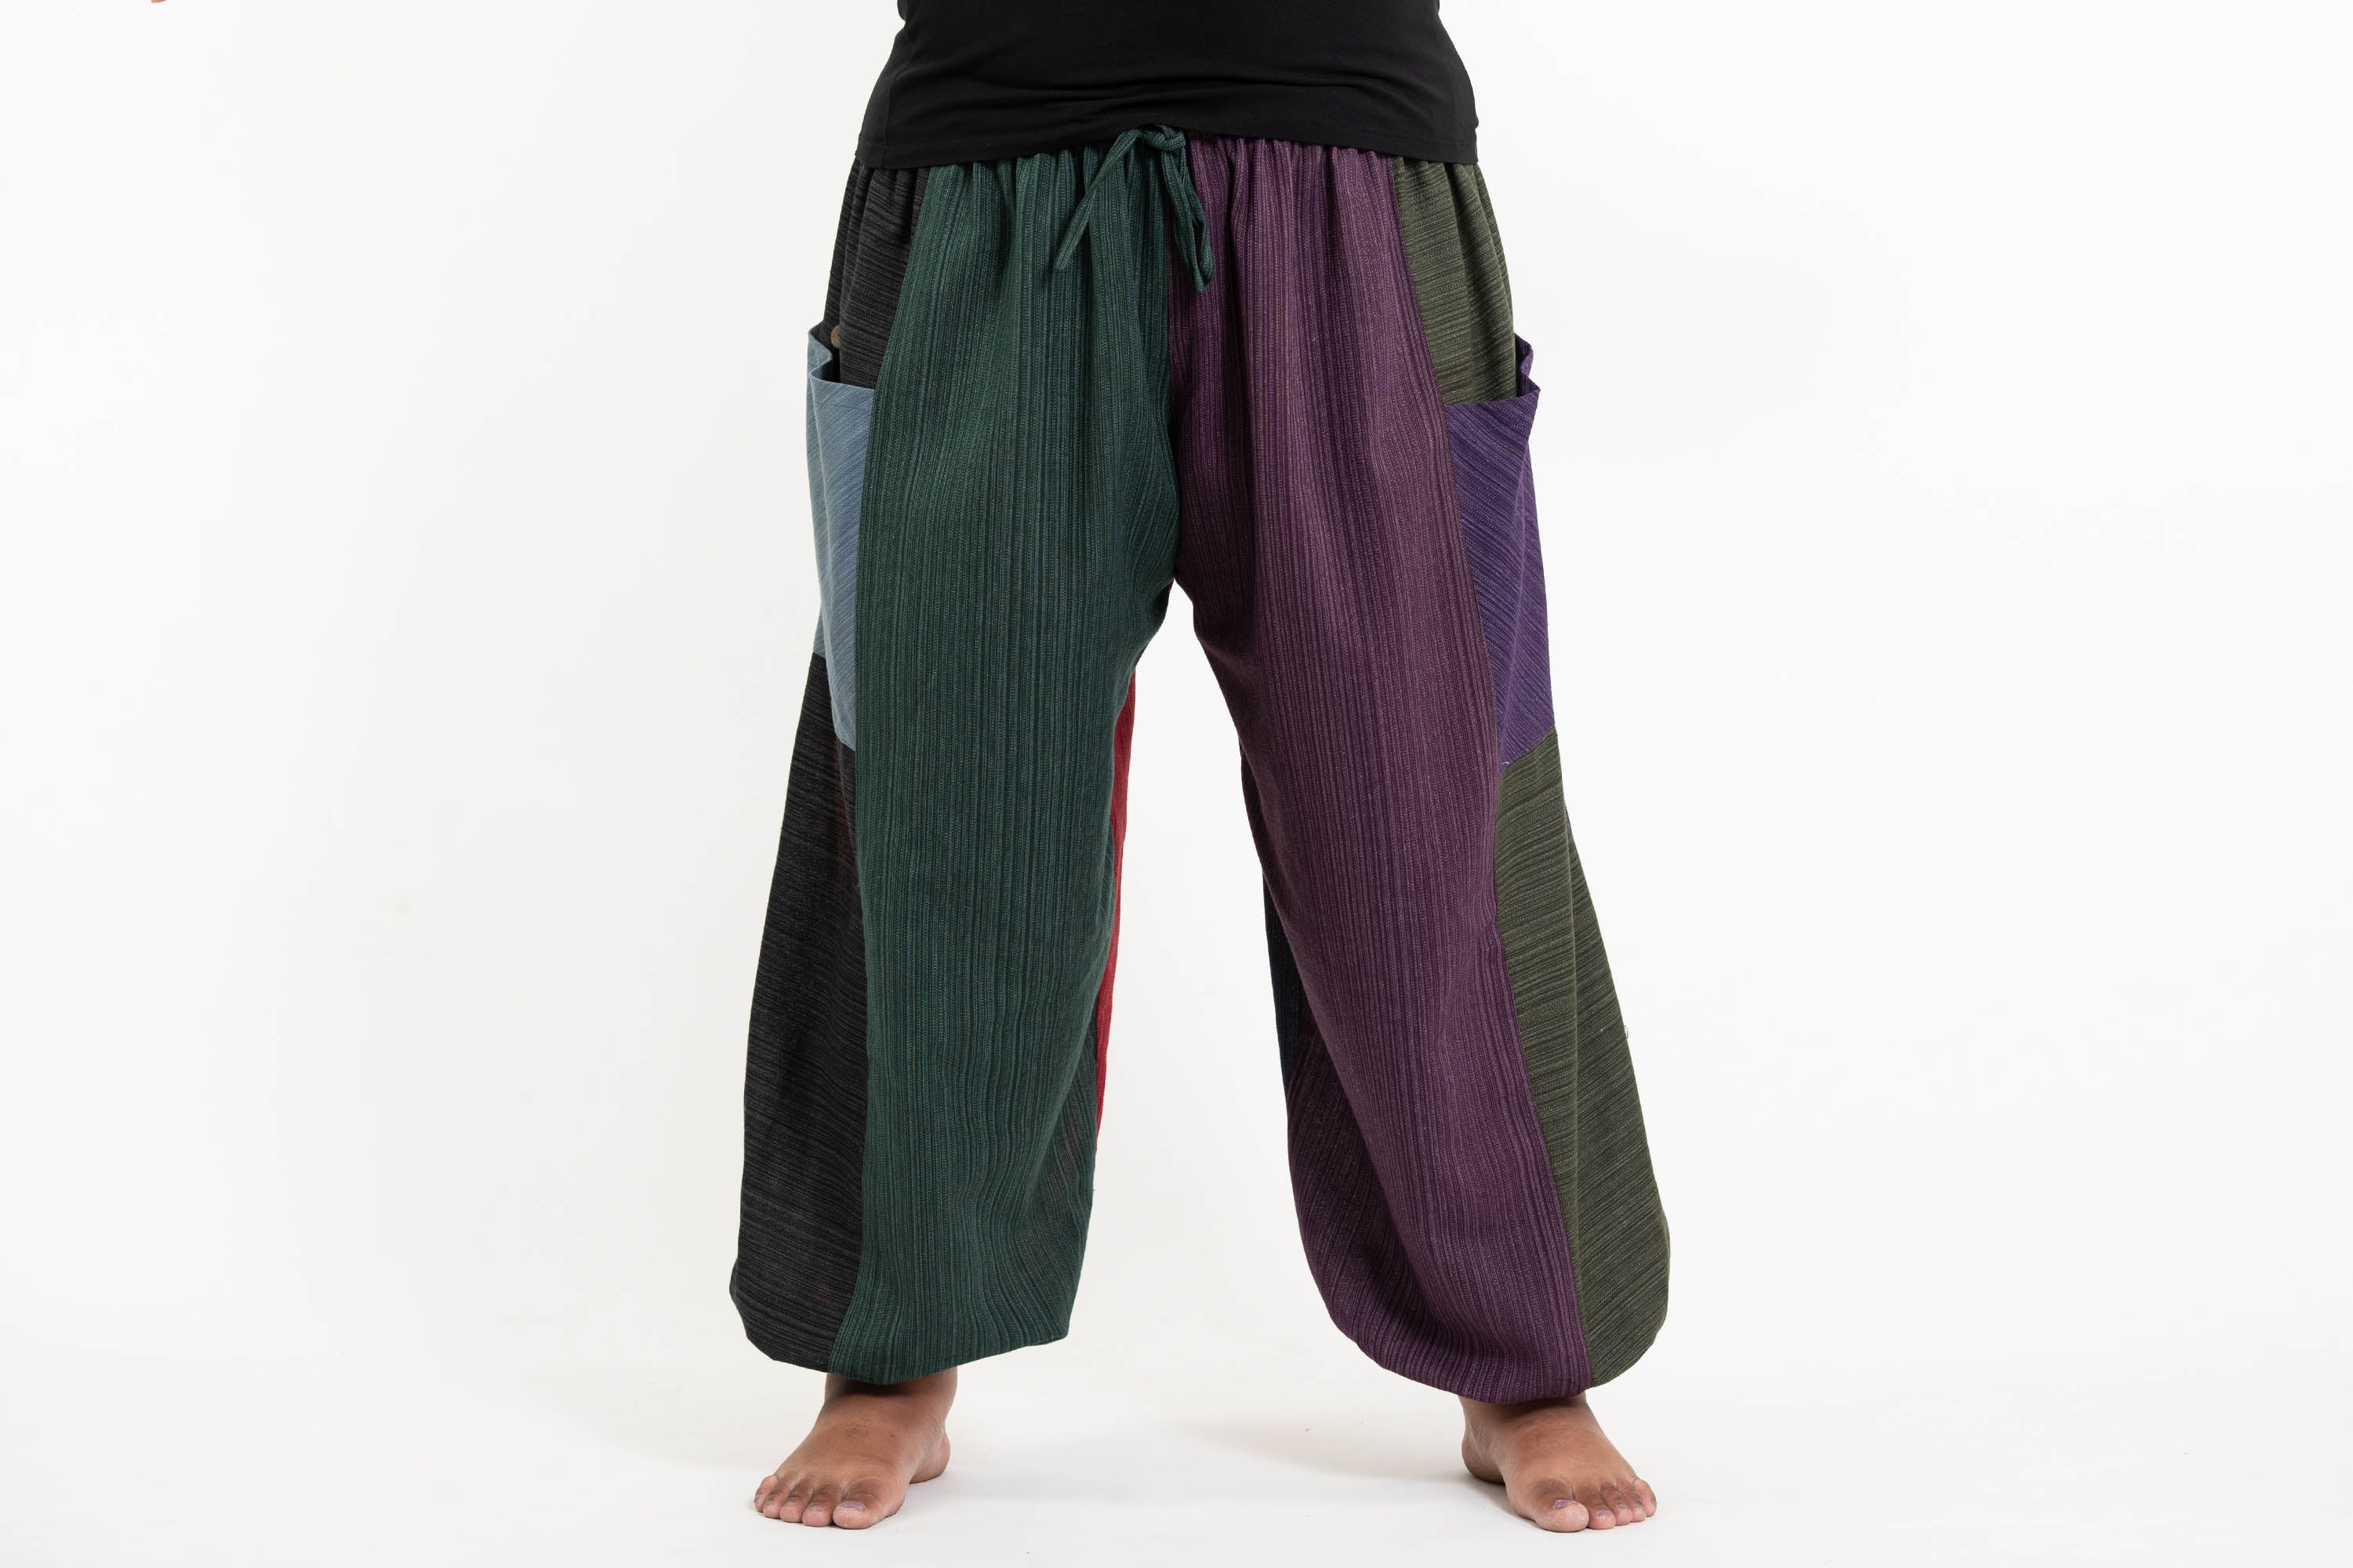 Plus Size Women's Drawstring Pinstripes Cotton Pants with Aztec